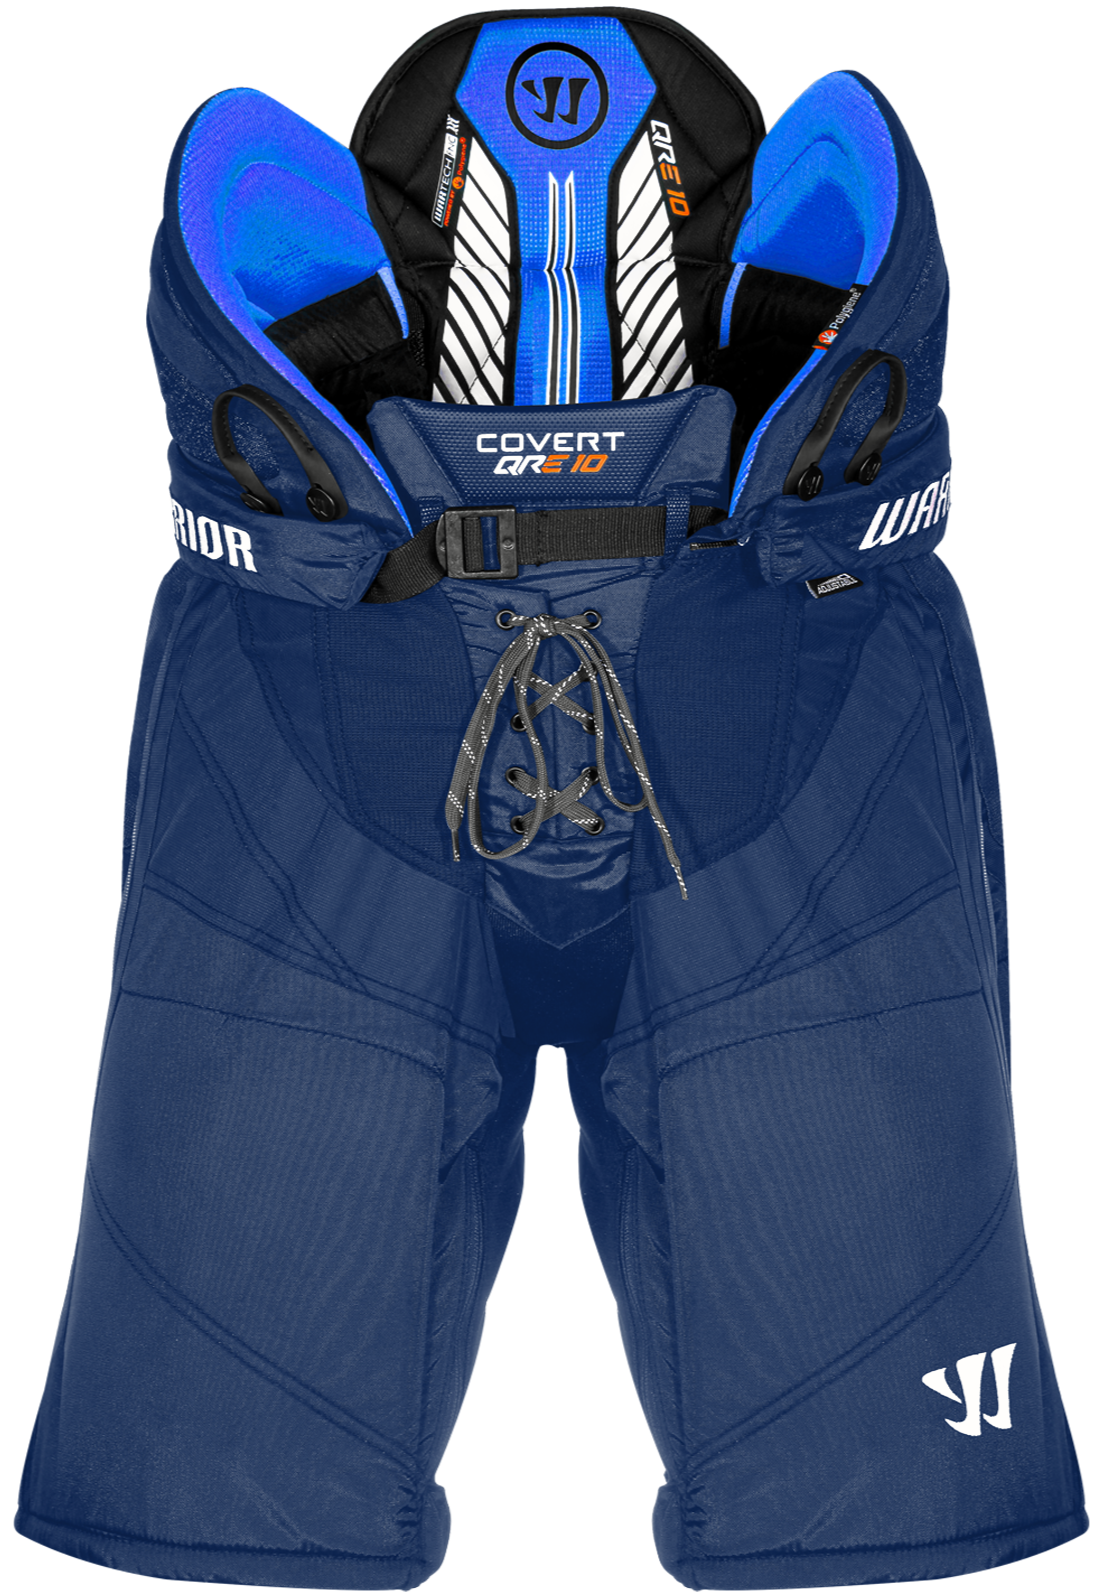 Warrior Covert QRE 10 Junior Hockey Pants